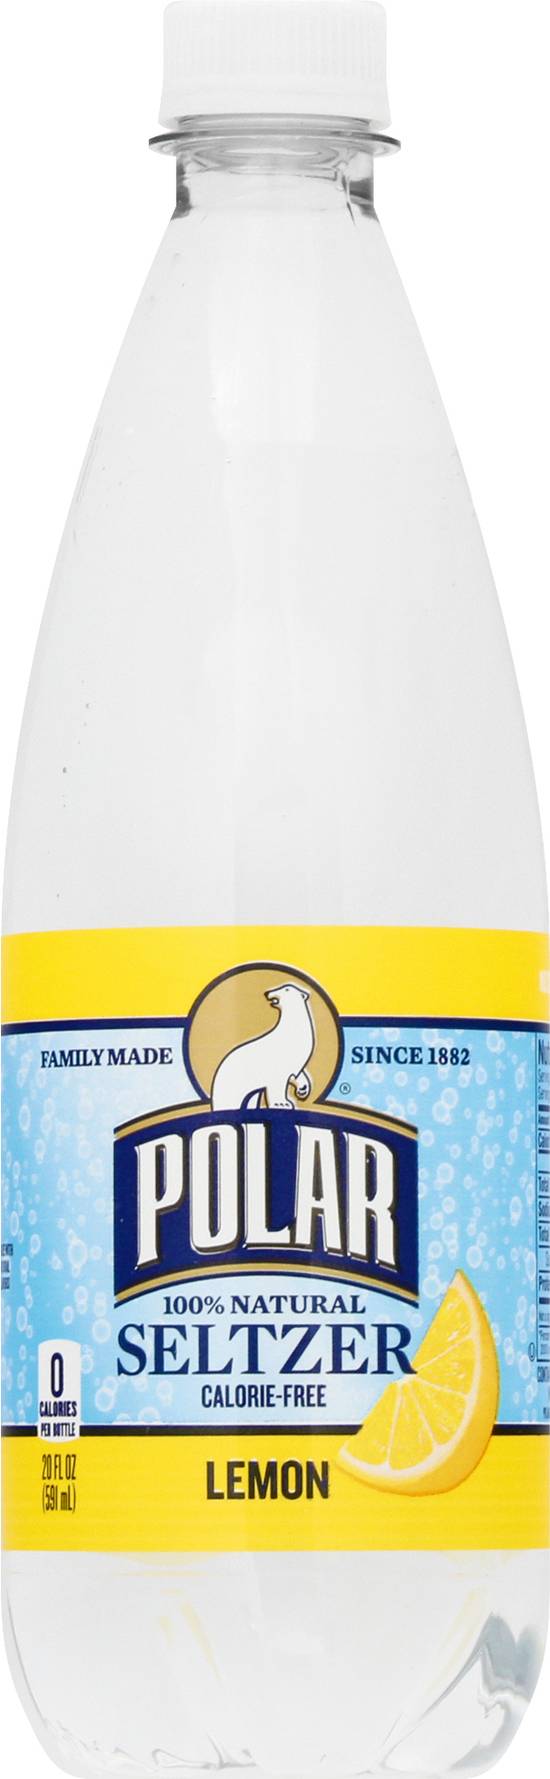 Polar Lemon Flavored Seltzer Water (20 fl oz)